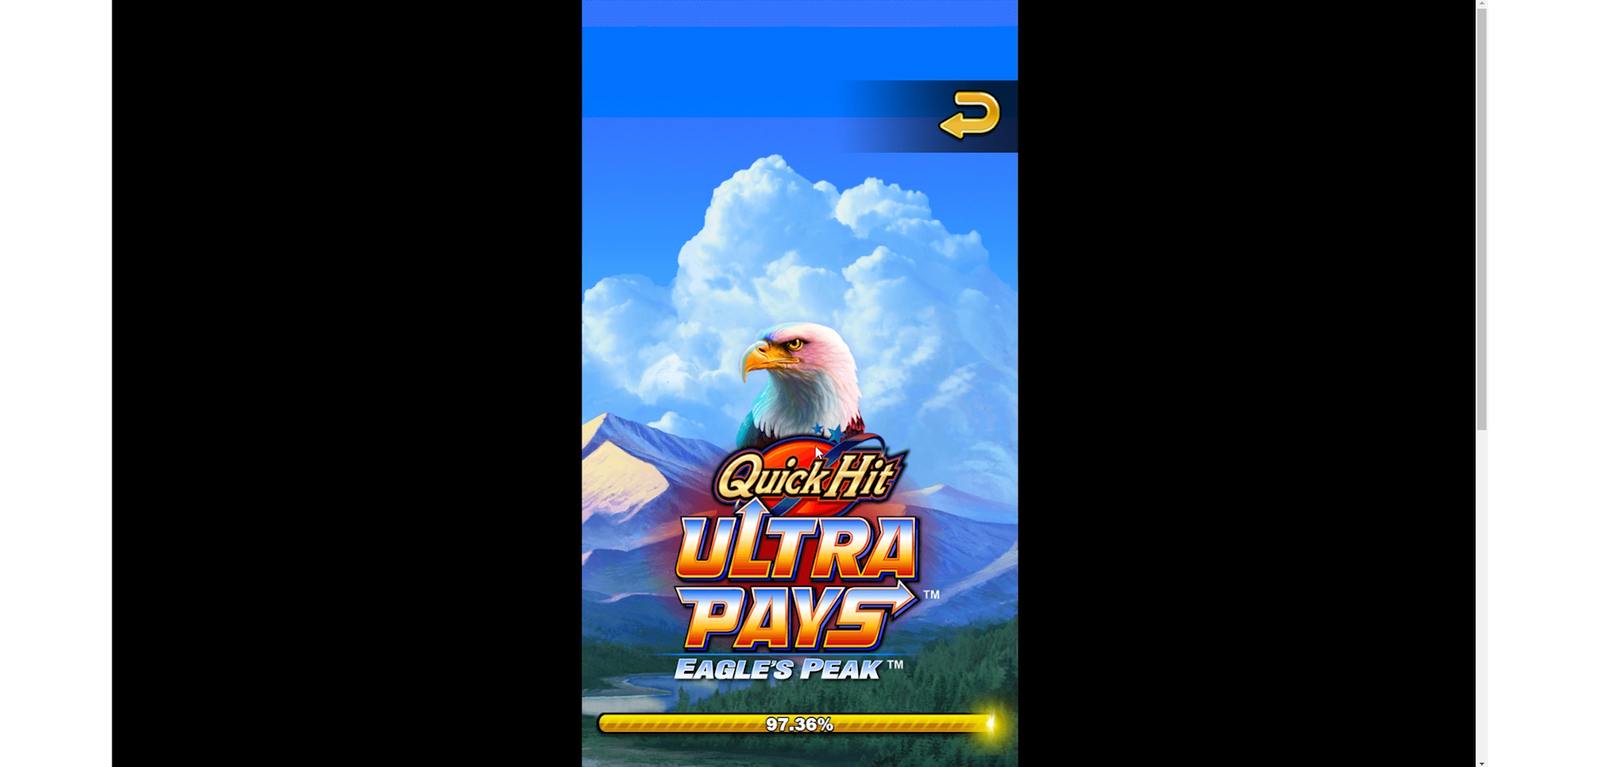 Quick Hit Ultra Pays Eagle’s Peak 4